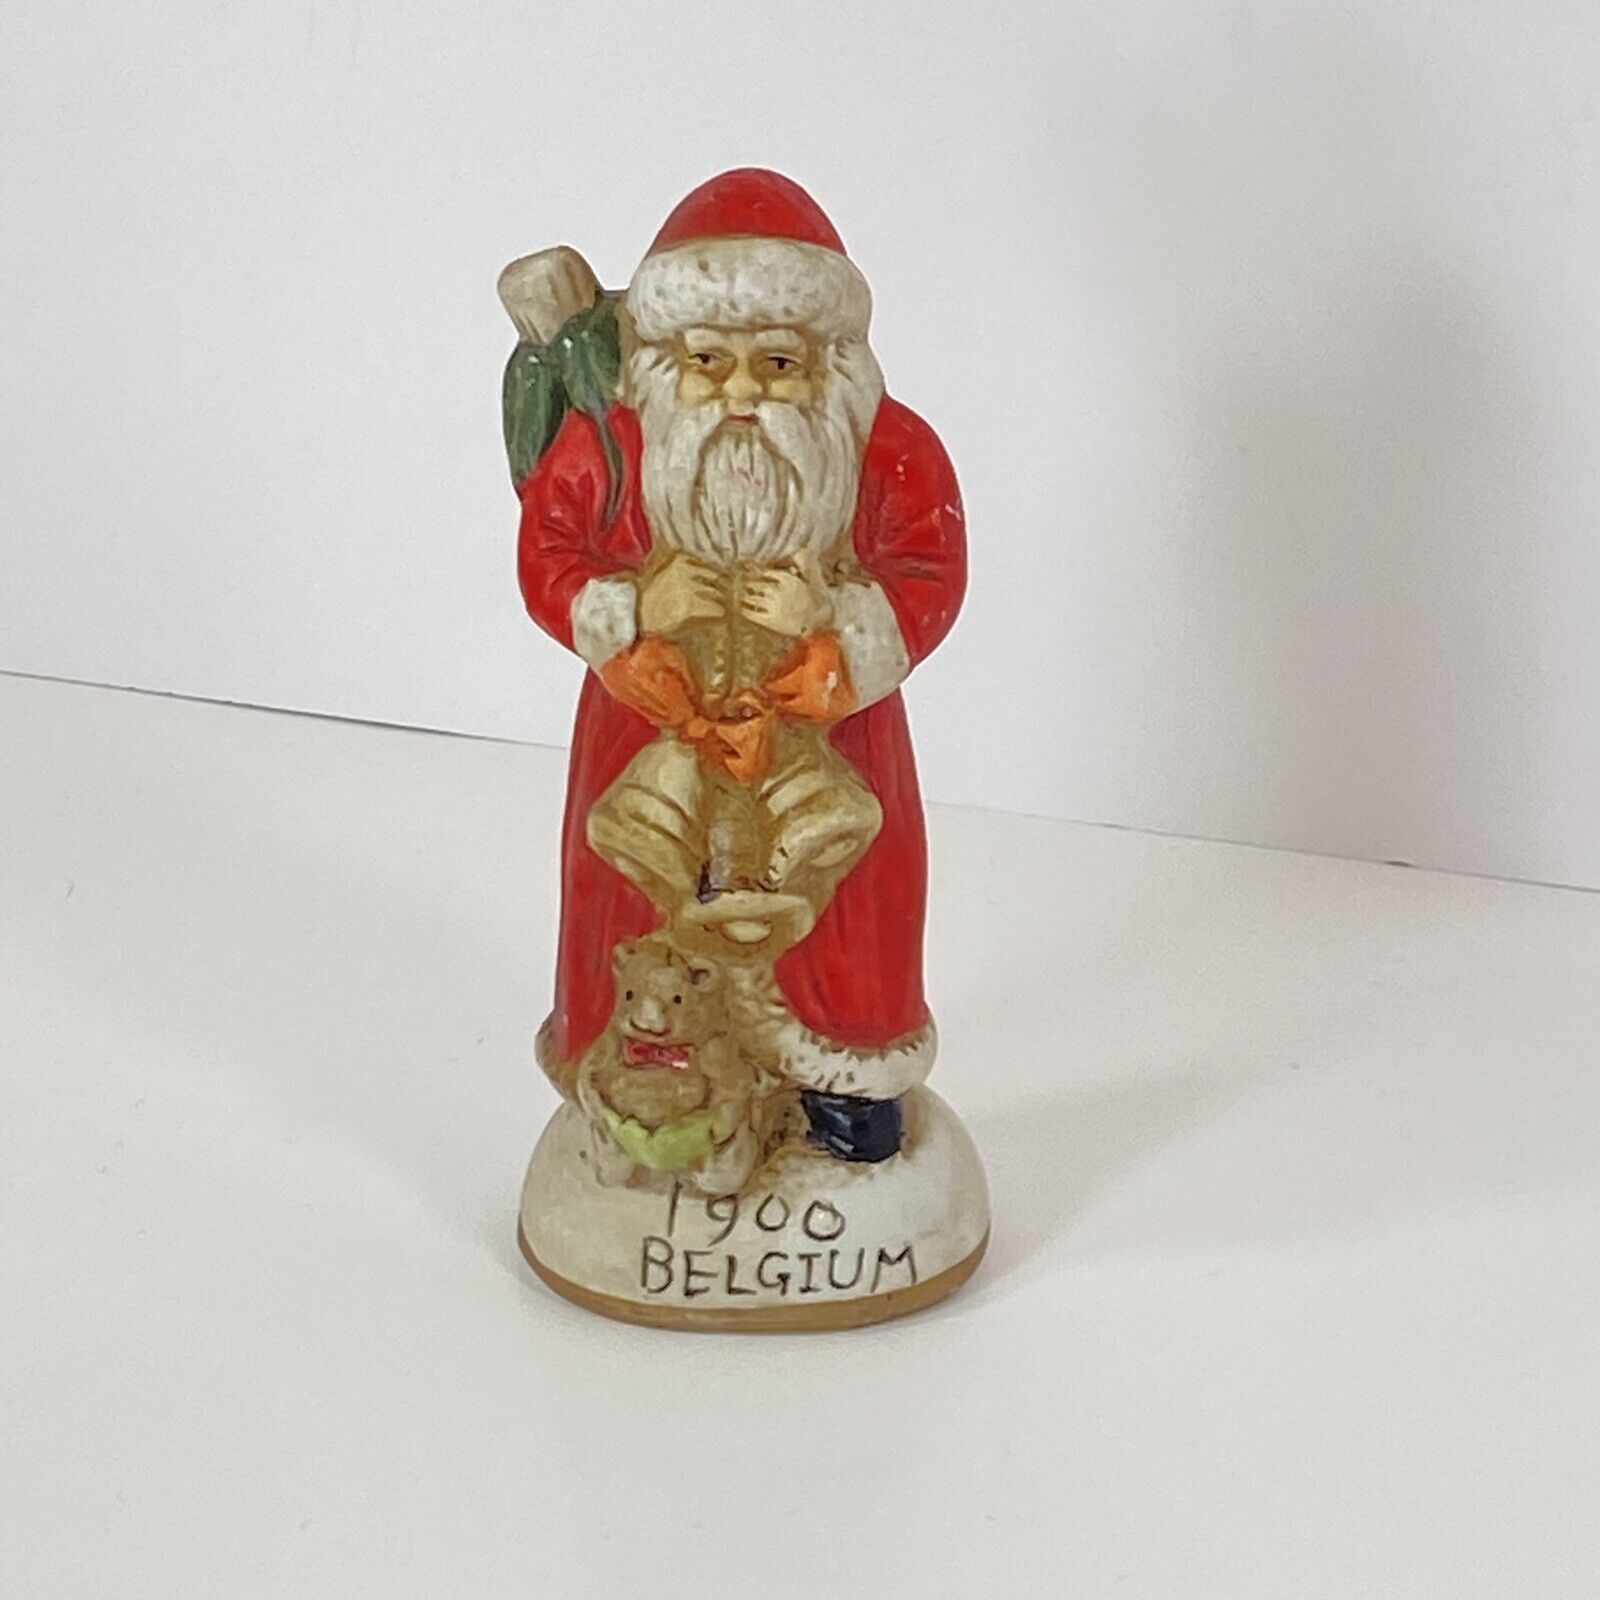 Old World 1900 Belgium Ceramic Santa Claus Figurine Christmas Gifts 5 1/2” Tall